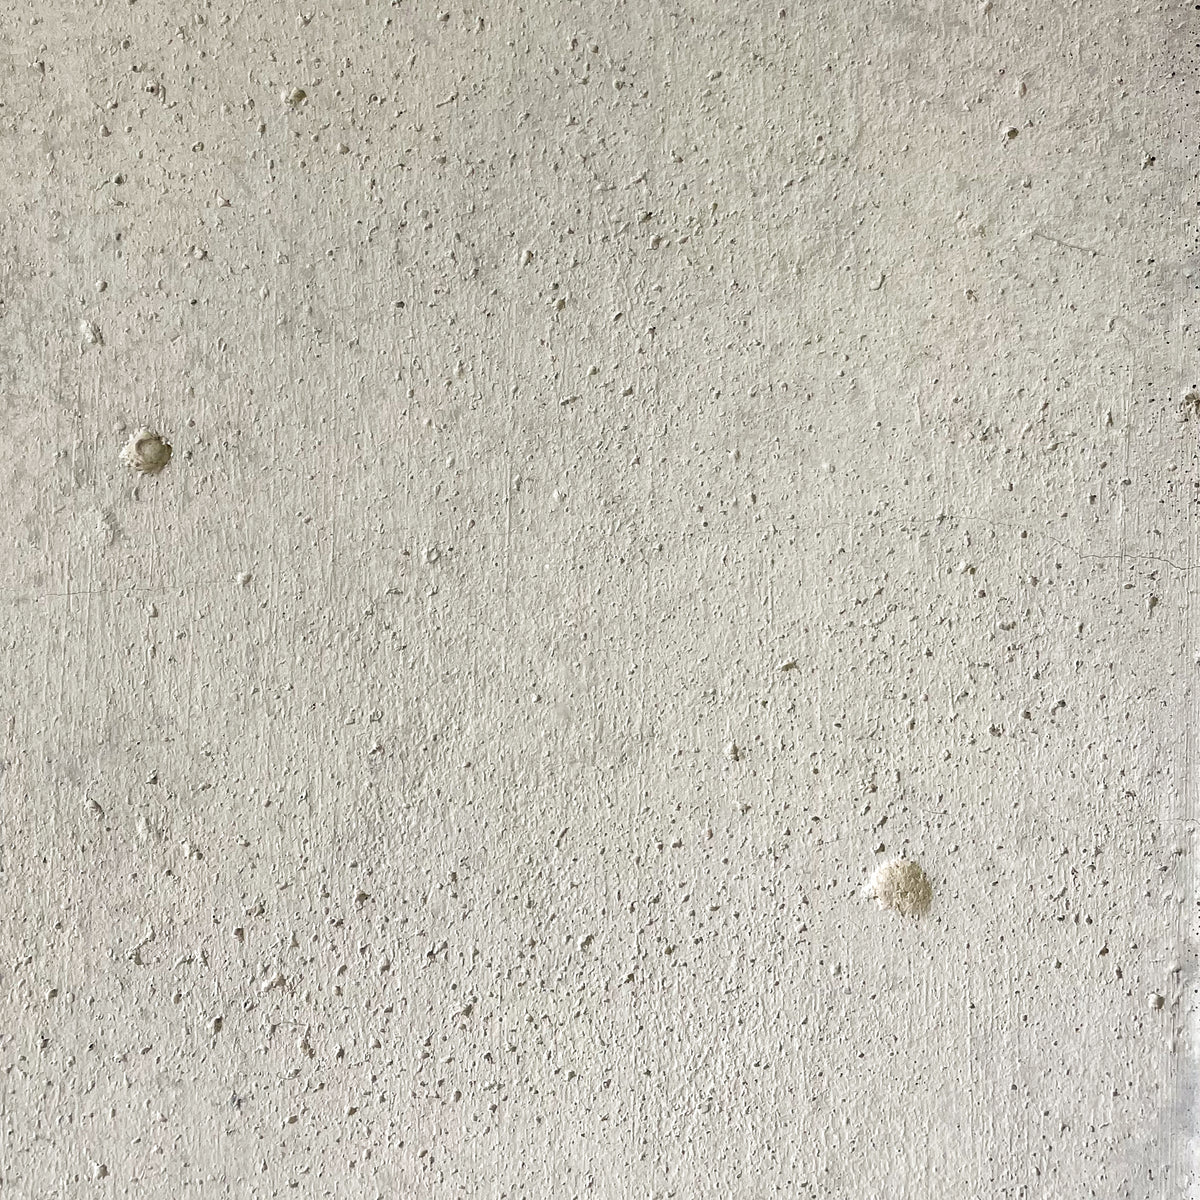 RealCast 48x48 Concrete Slab - Natural Grey